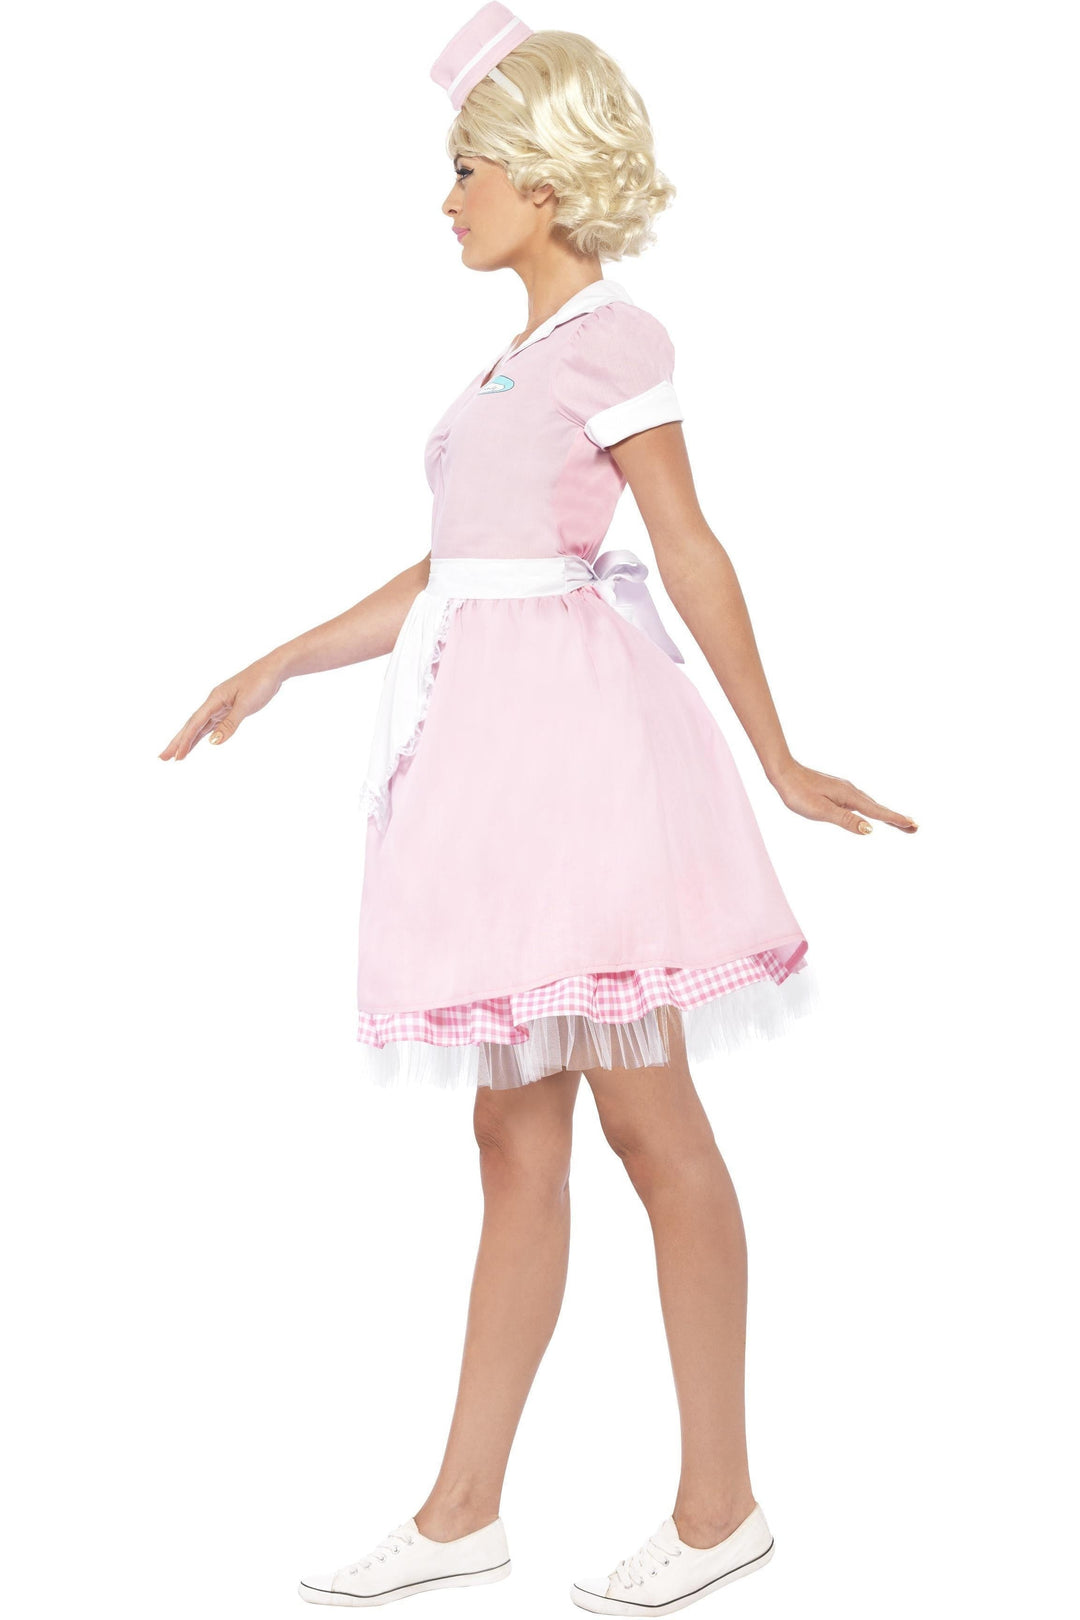 50s Diner Girl Costume